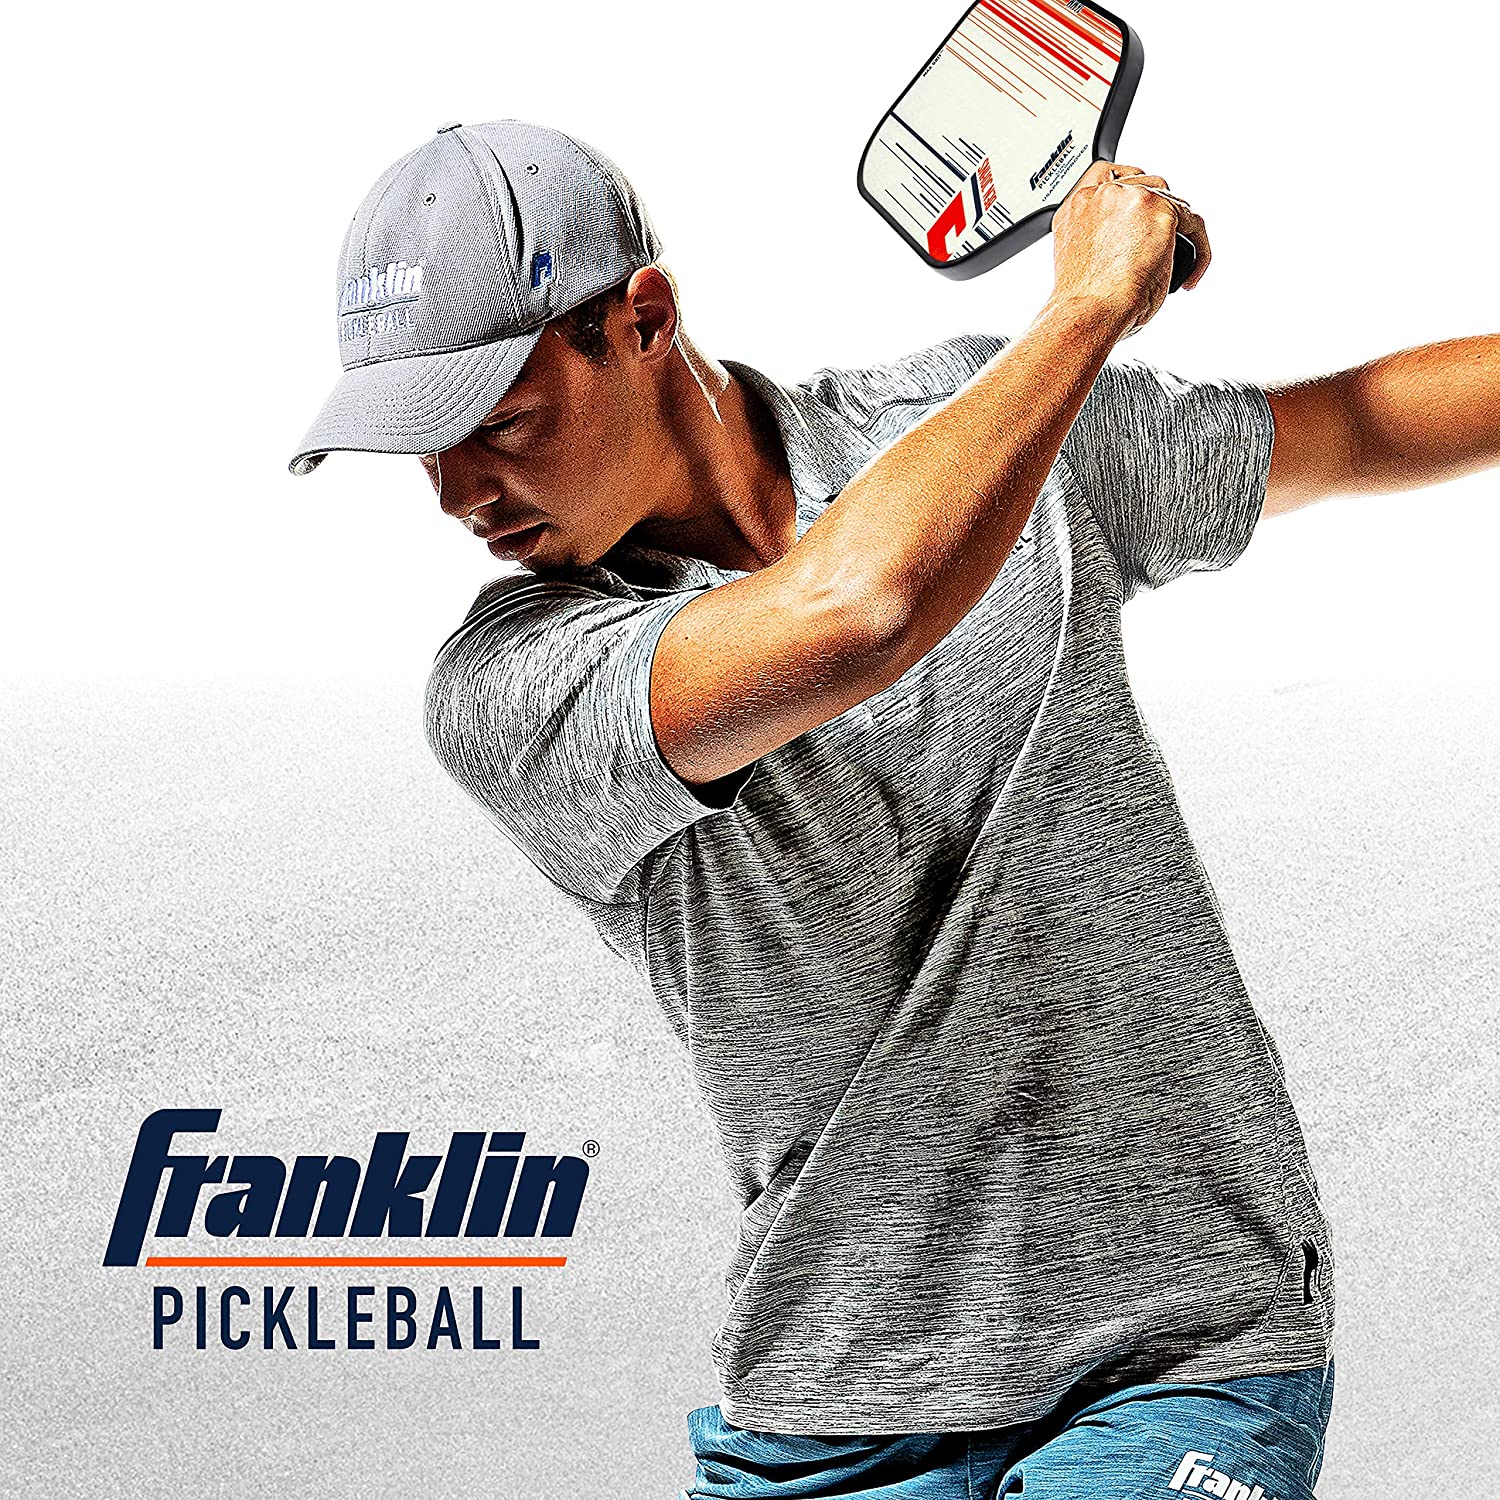 Franklin pickleball - a man swinging a pickleball.